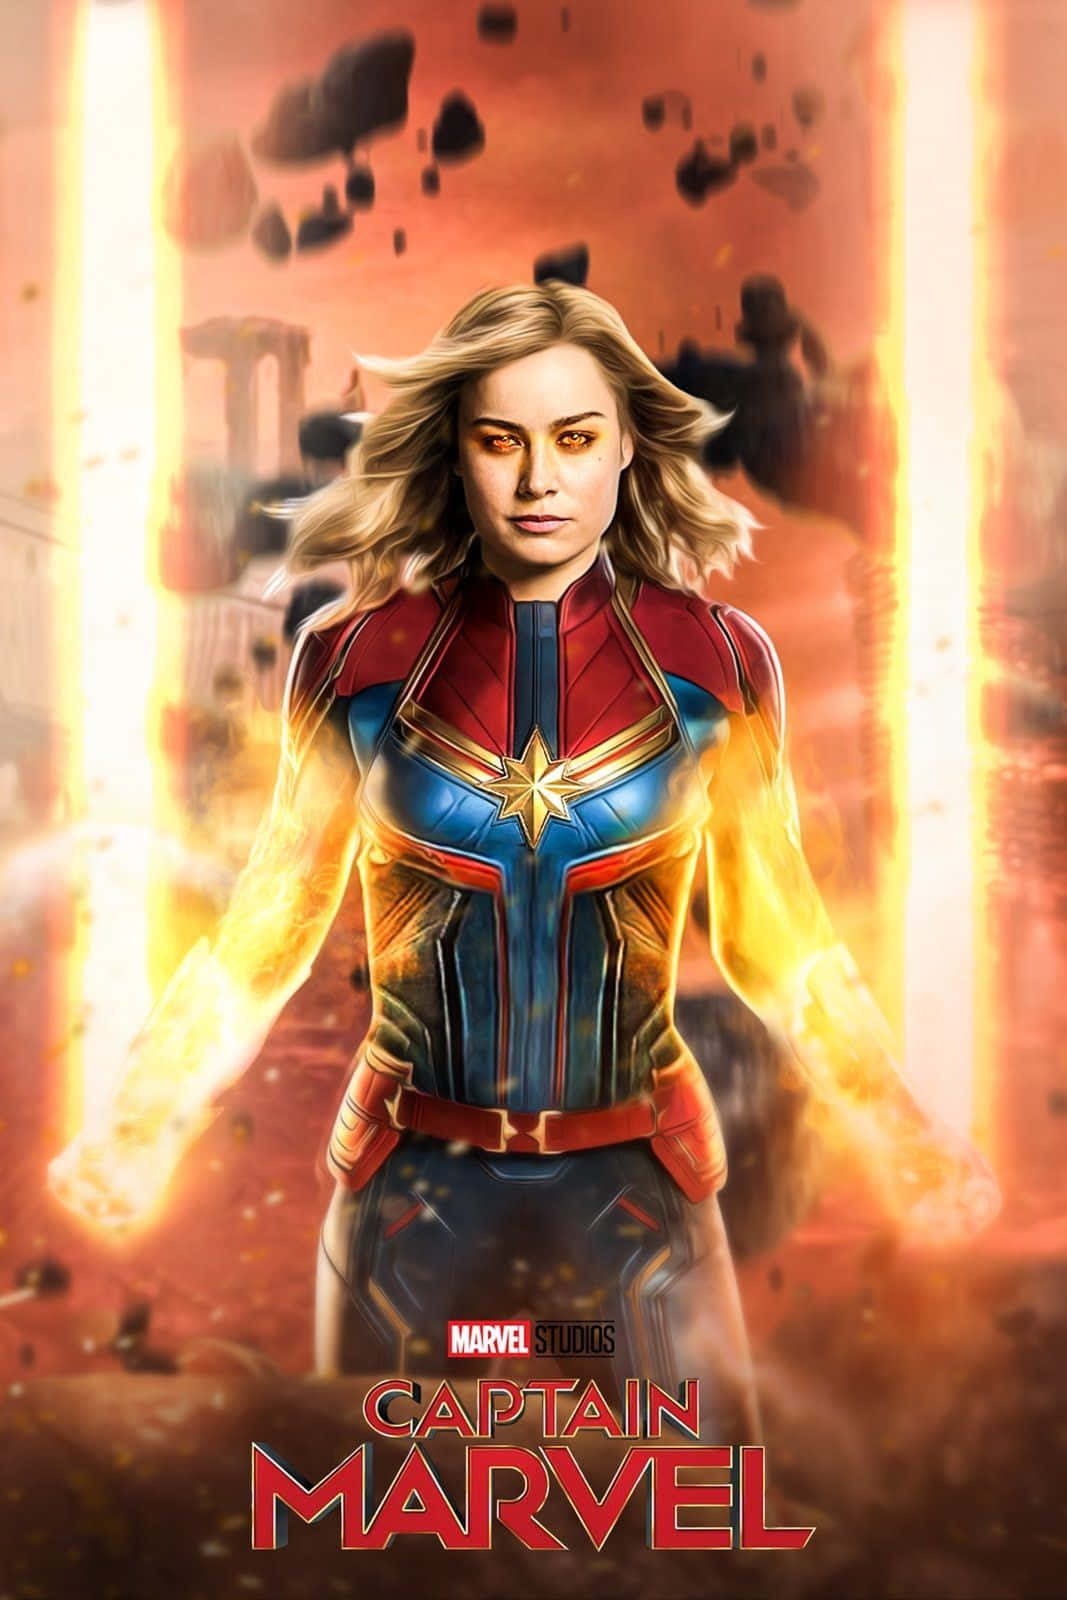 The superhero, Captain Marvel in all her glory